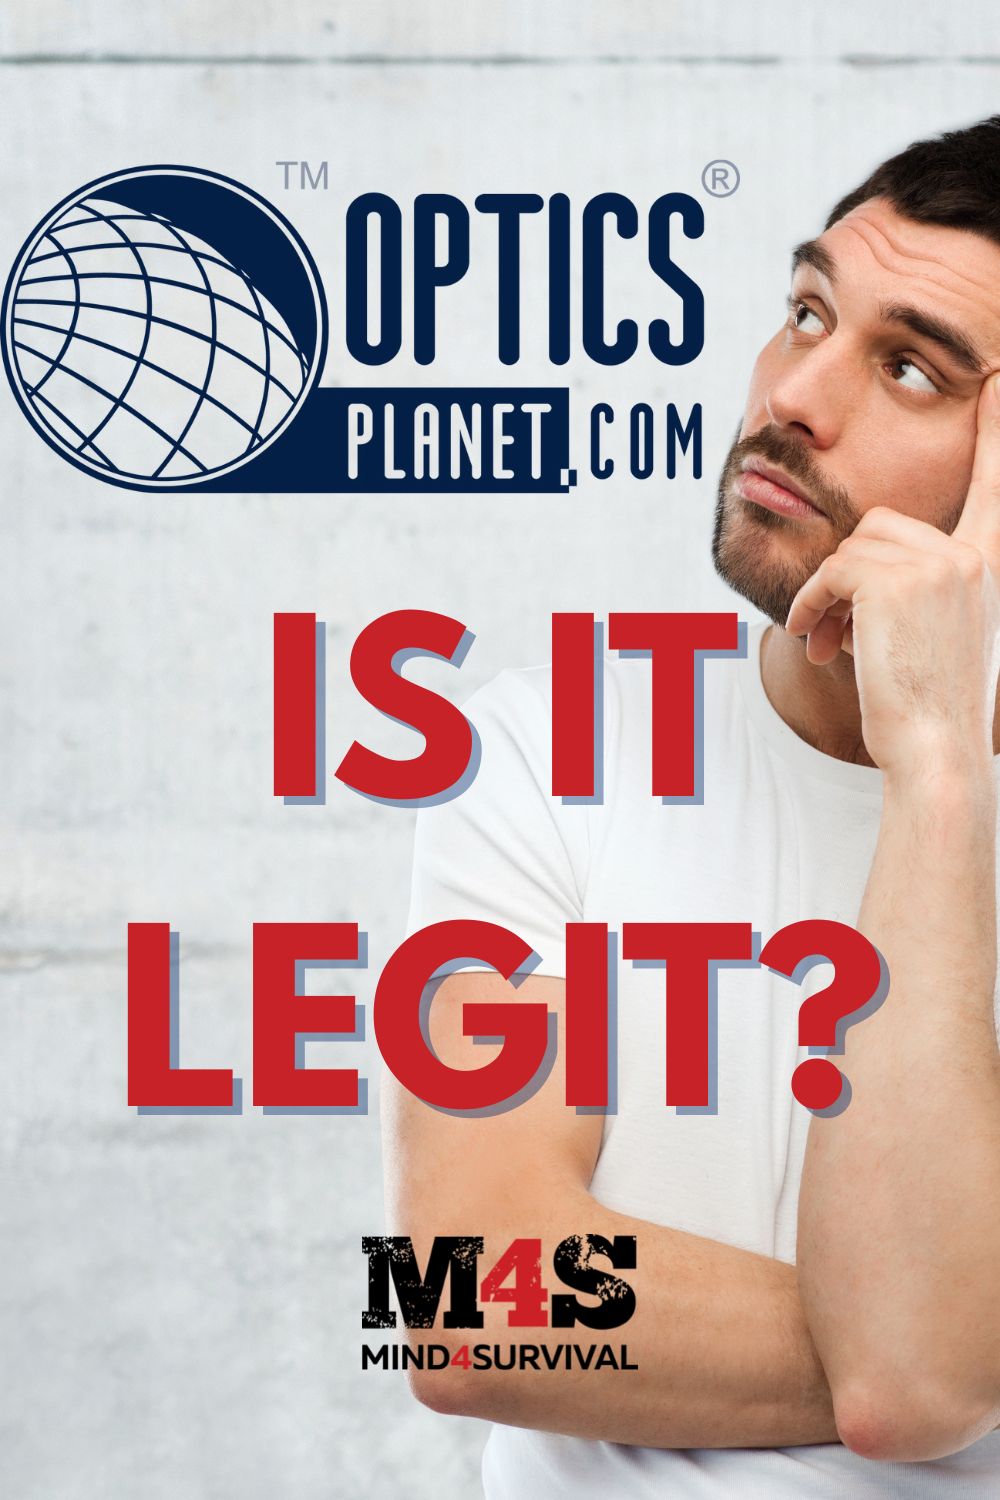 OpticsPlanet: Is Optics Planet Legit? (My Personal Experience)